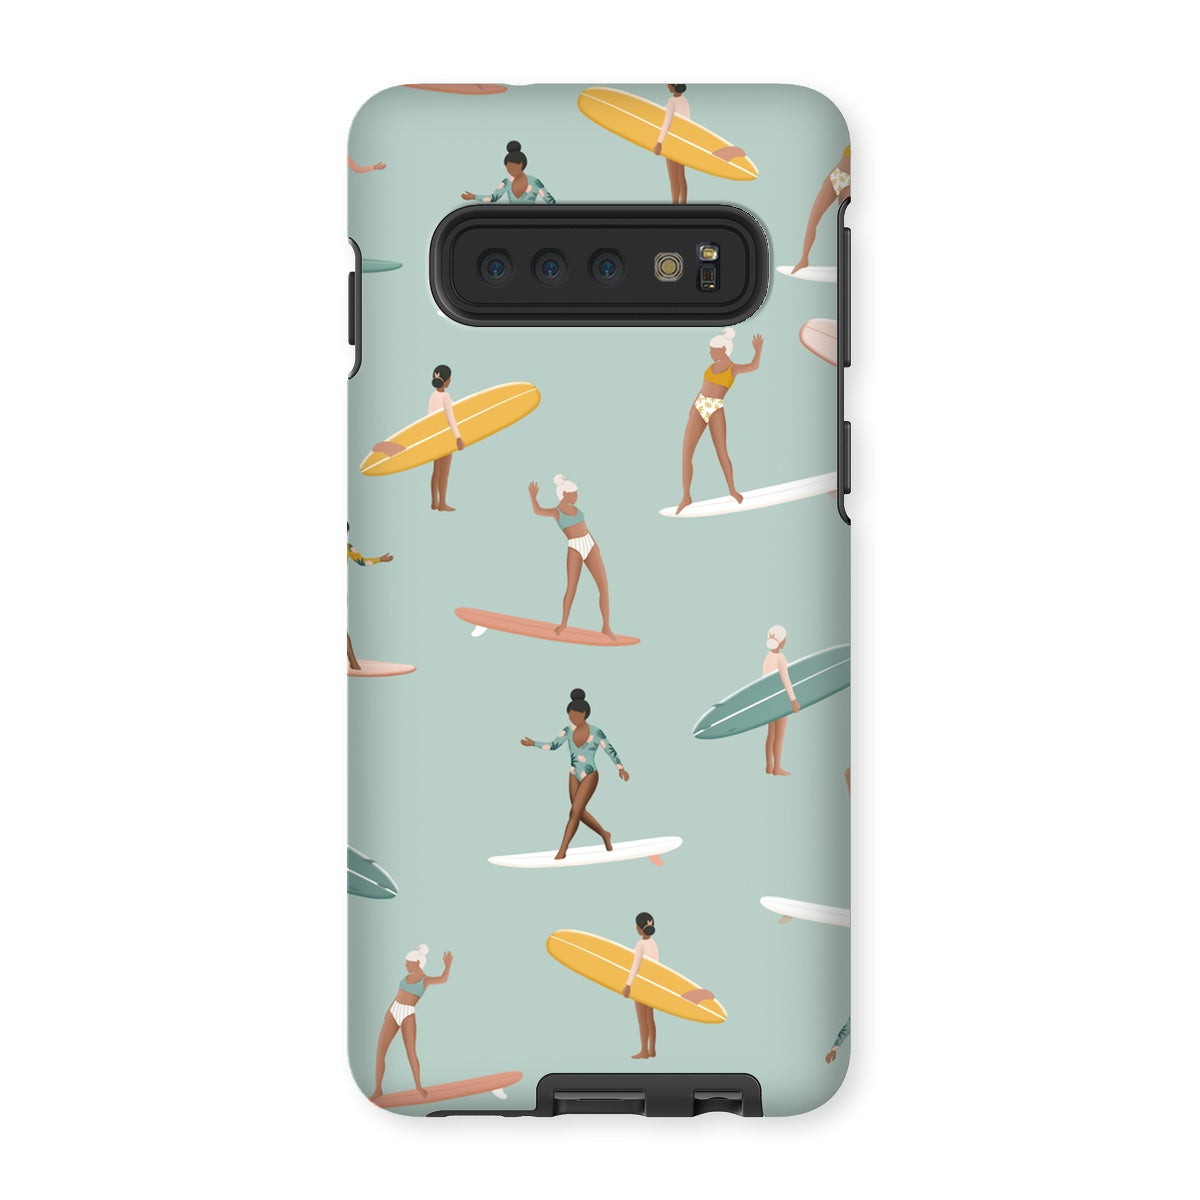 Surf pattern reinforced phone case